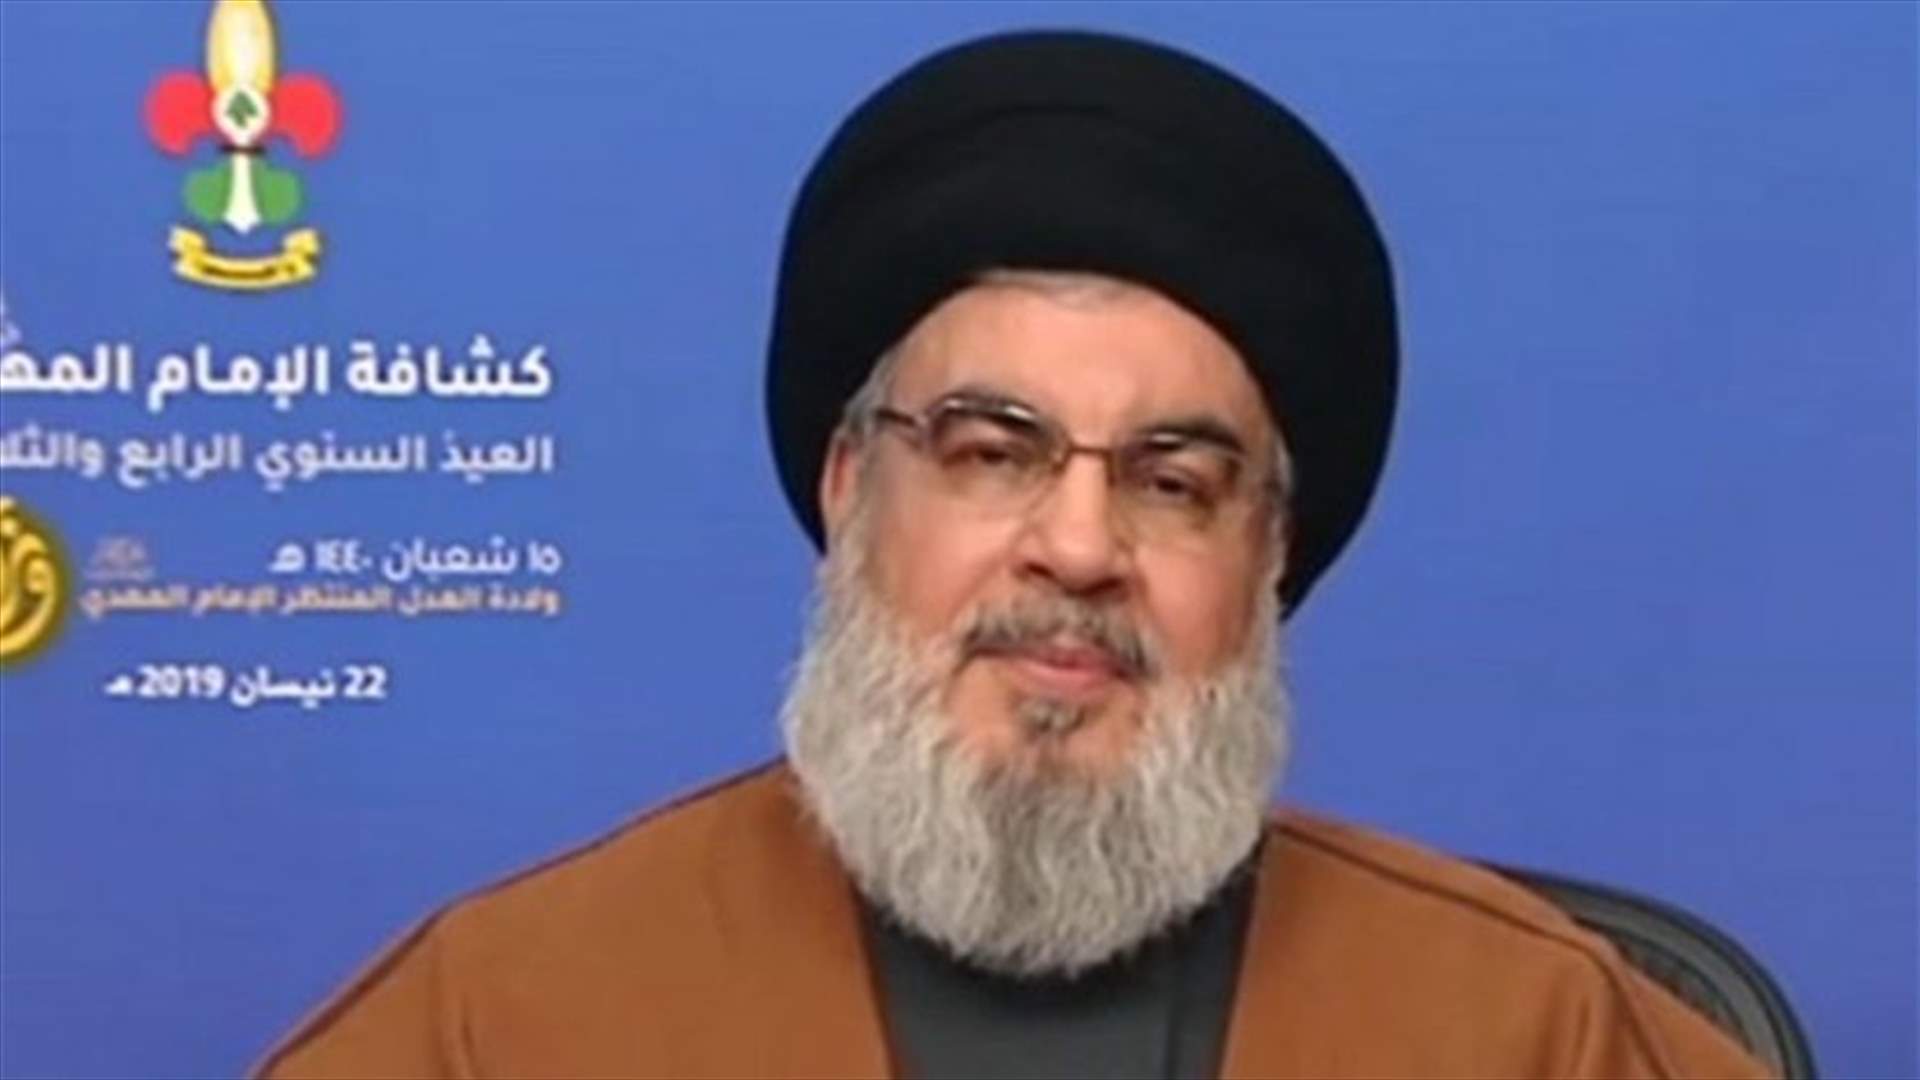 Nasrallah denies saying there will be an Israeli war against Lebanon